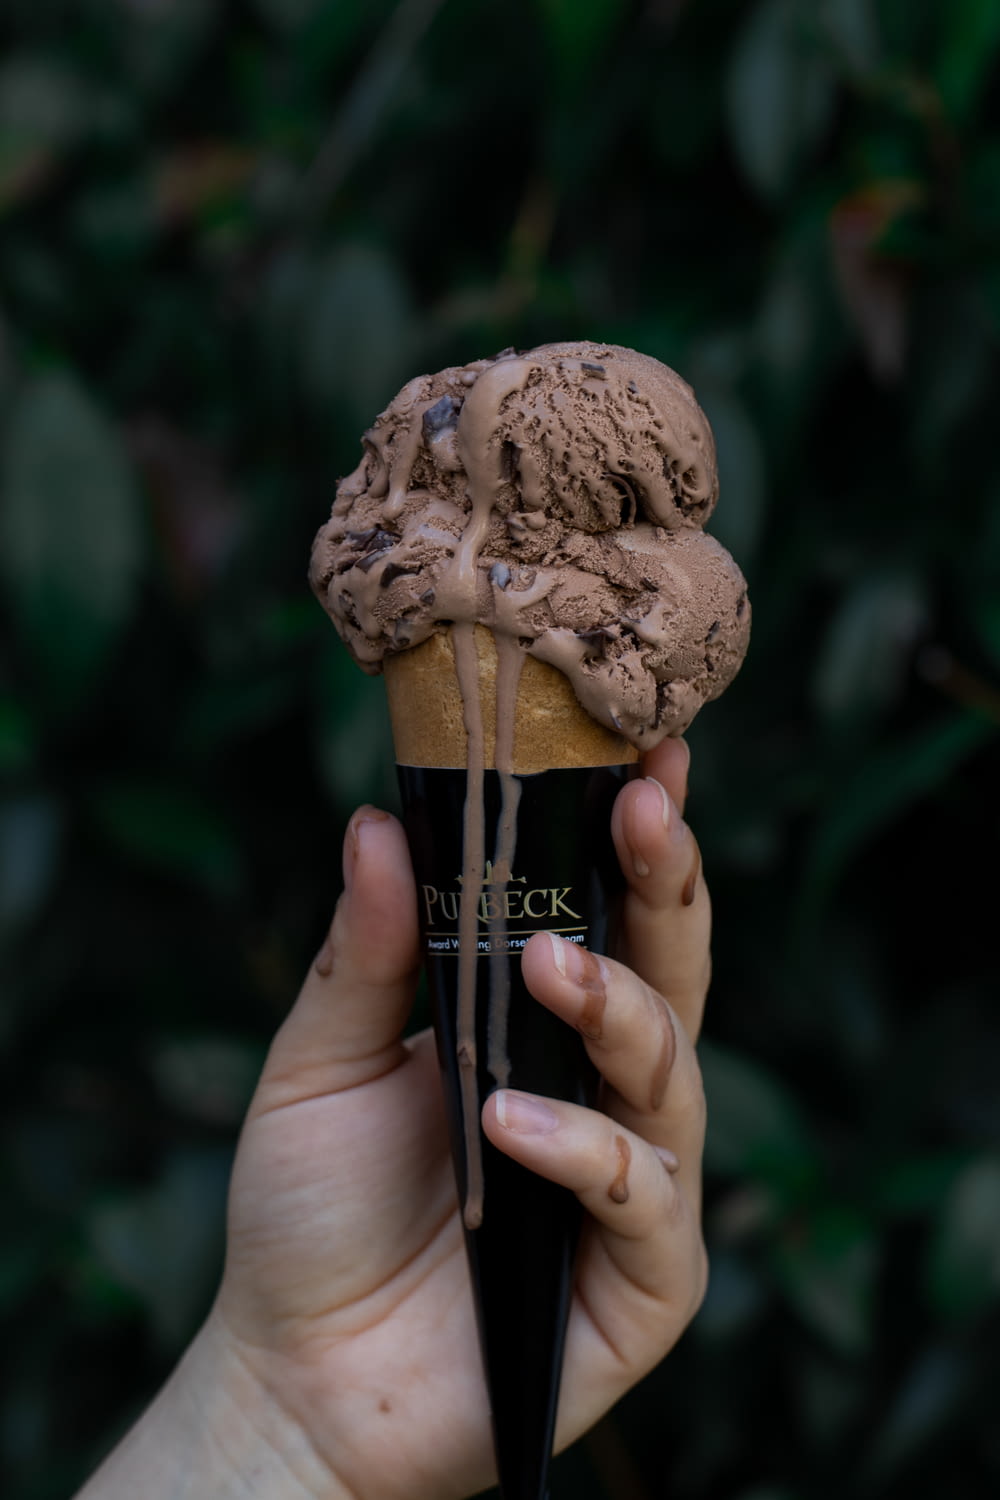 a hand holding a chocolate ice cream cone